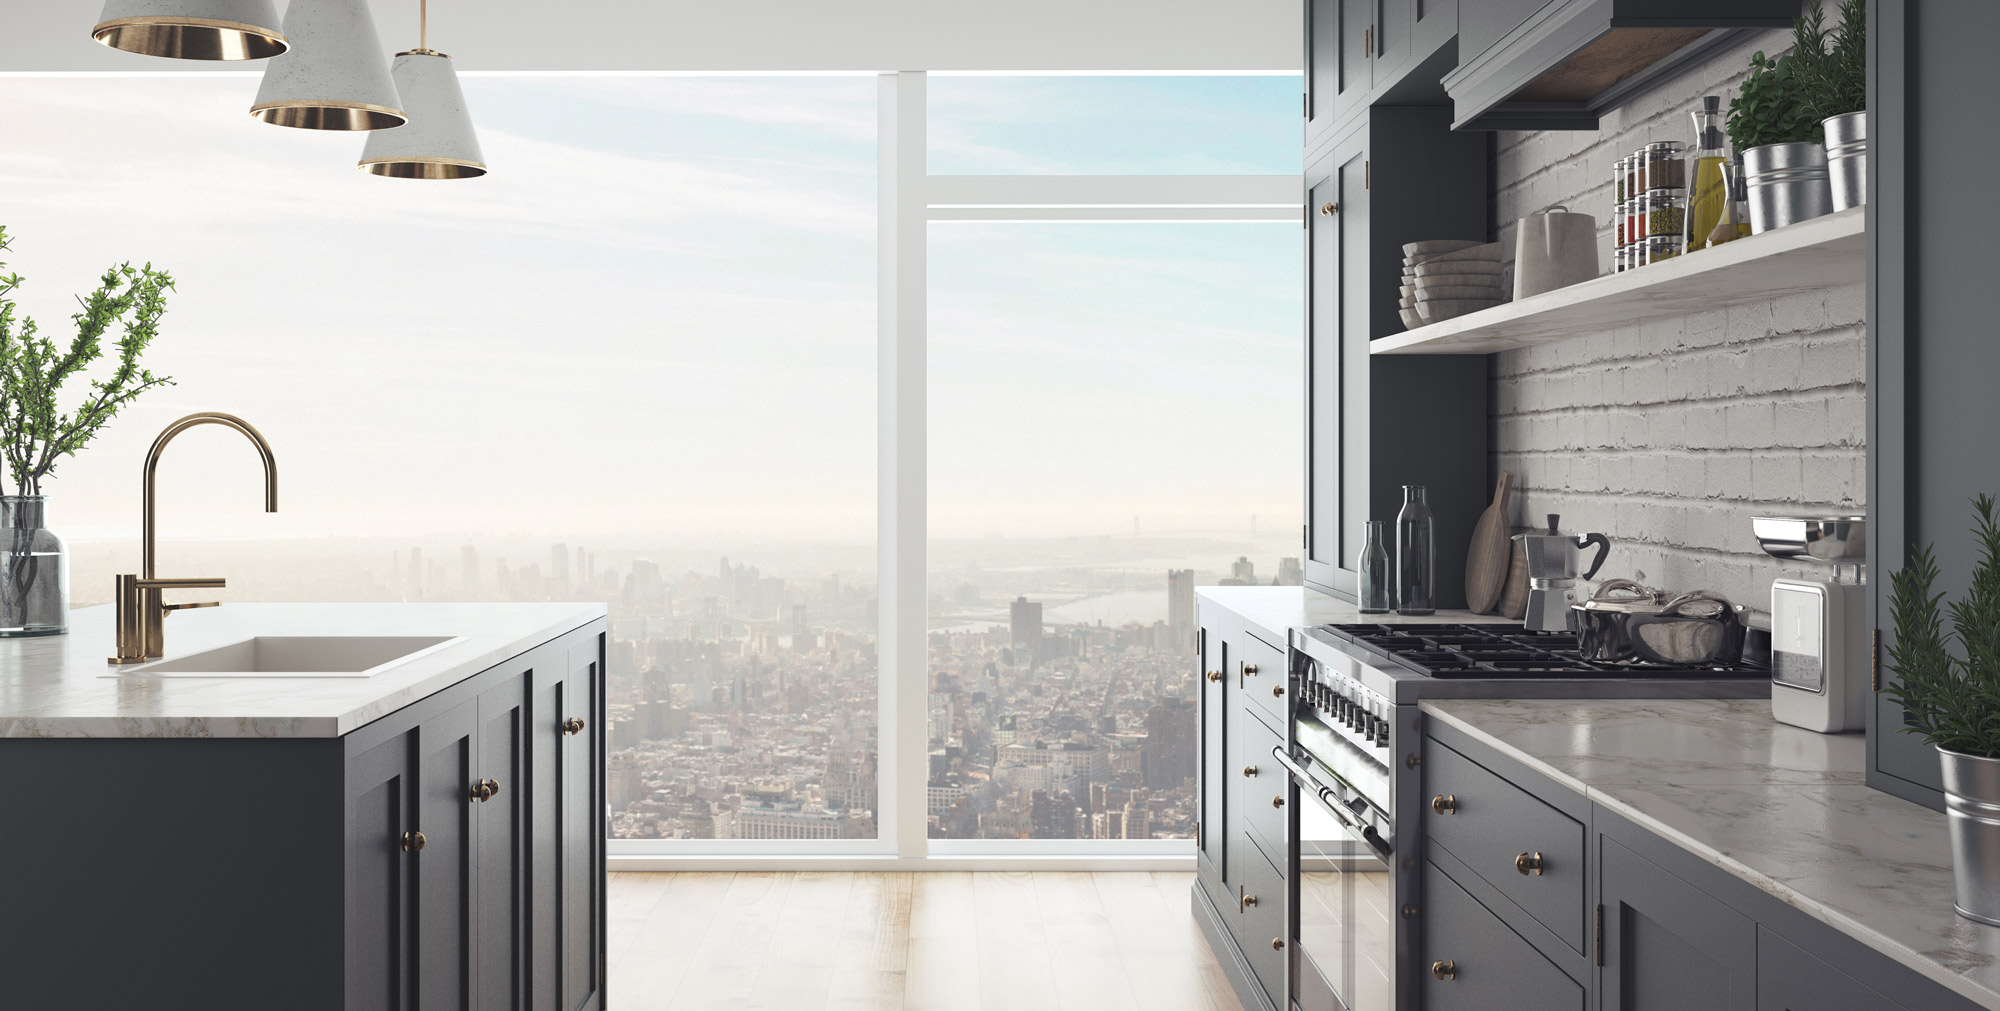 Kitchen with window skyline view